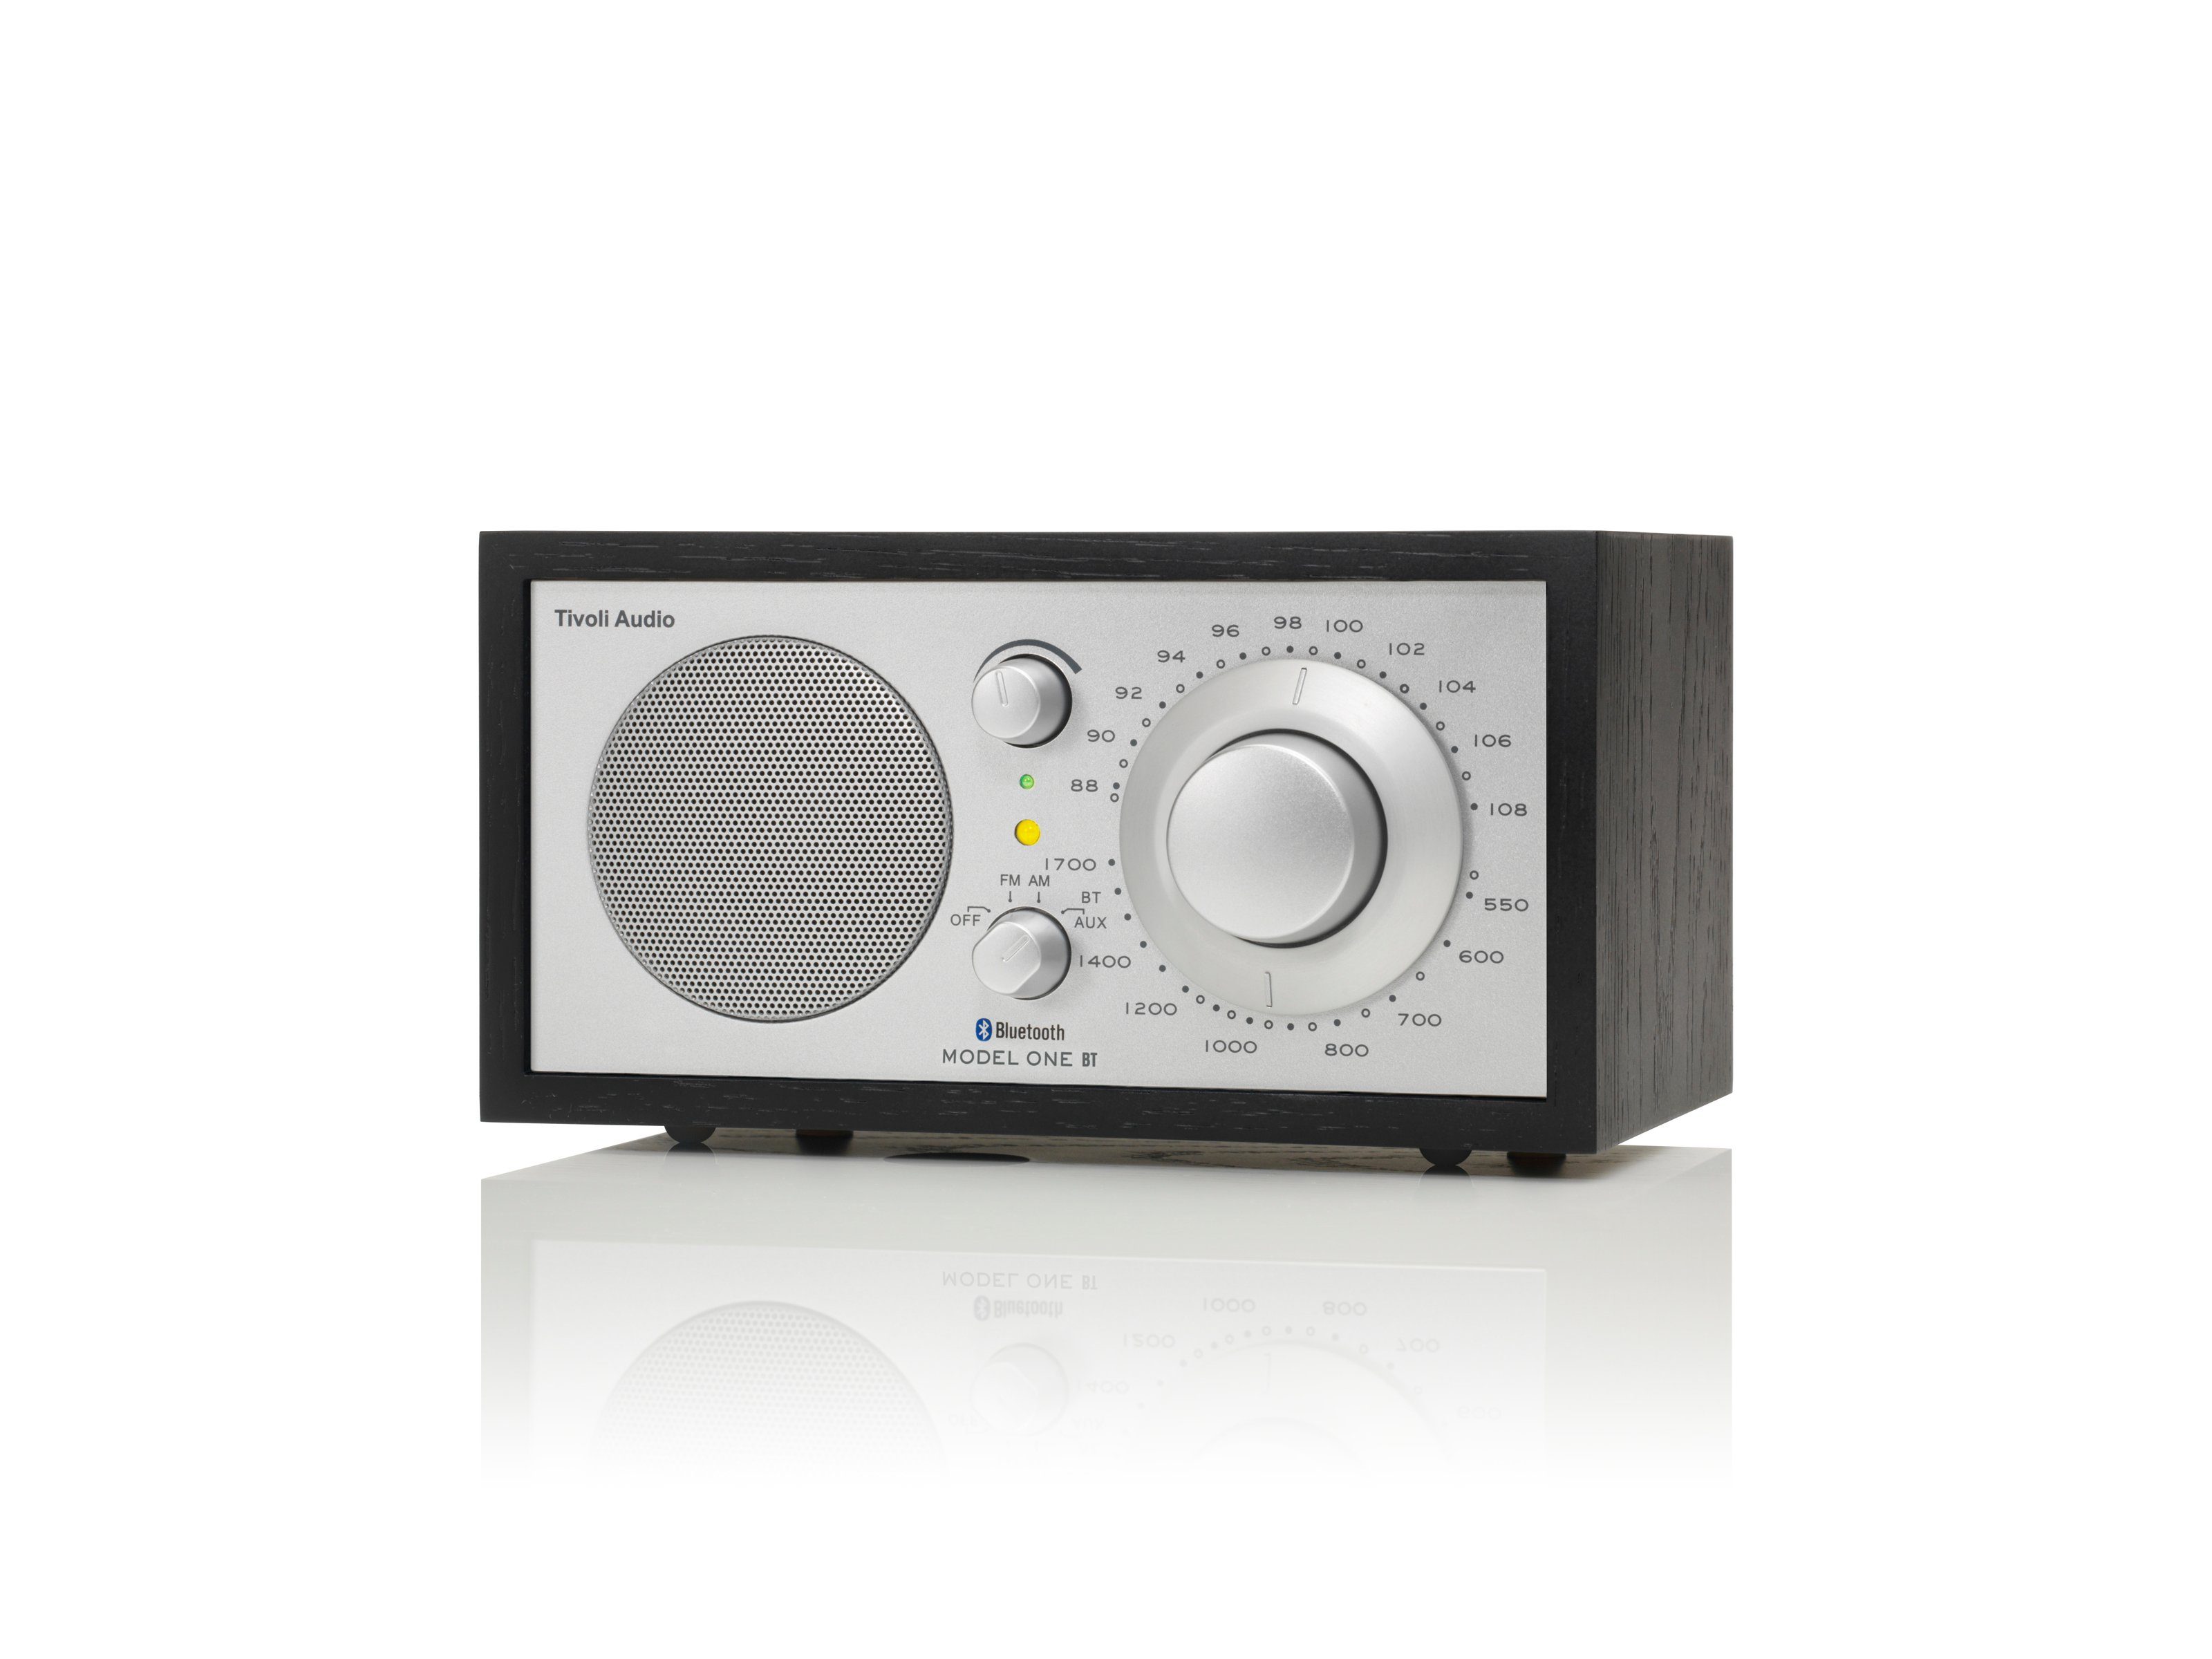 Tivoli Audio »Model One BT« UKW-Radio (FM-Tuner, analoges Tisch-Radio,  kompaktes Echtholz-Gehäuse, Retro-Optik, Full-Range Bluetooth-Lautsprecher)  online kaufen | OTTO